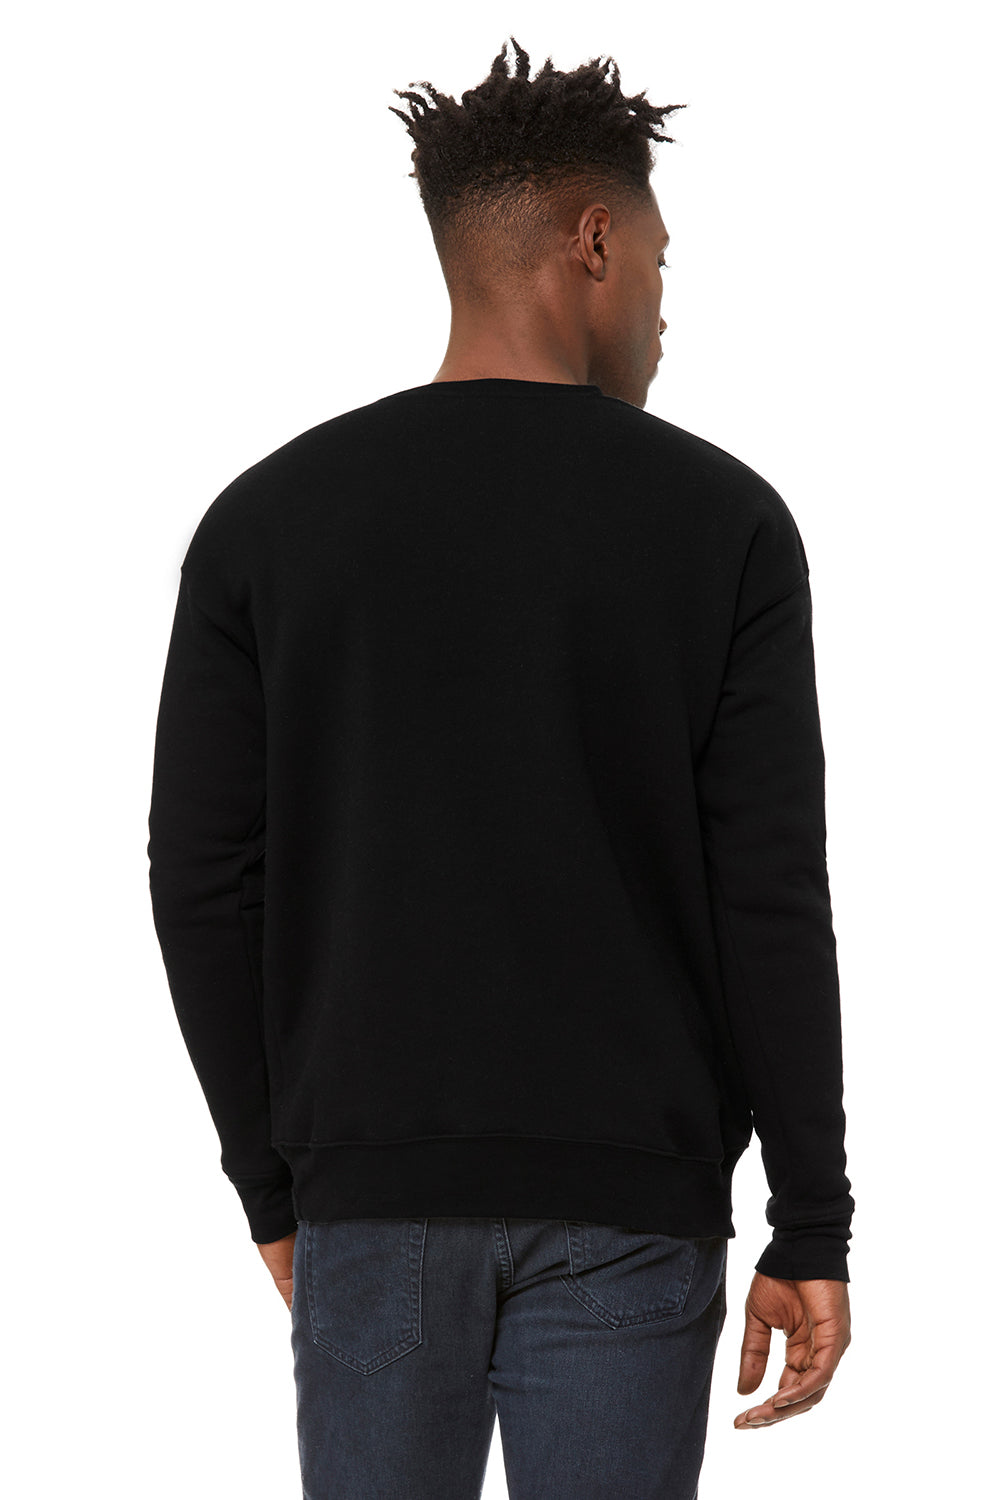 Bella + Canvas BC3945/3945 Mens Fleece Crewneck Sweatshirt DTG Black Model Back